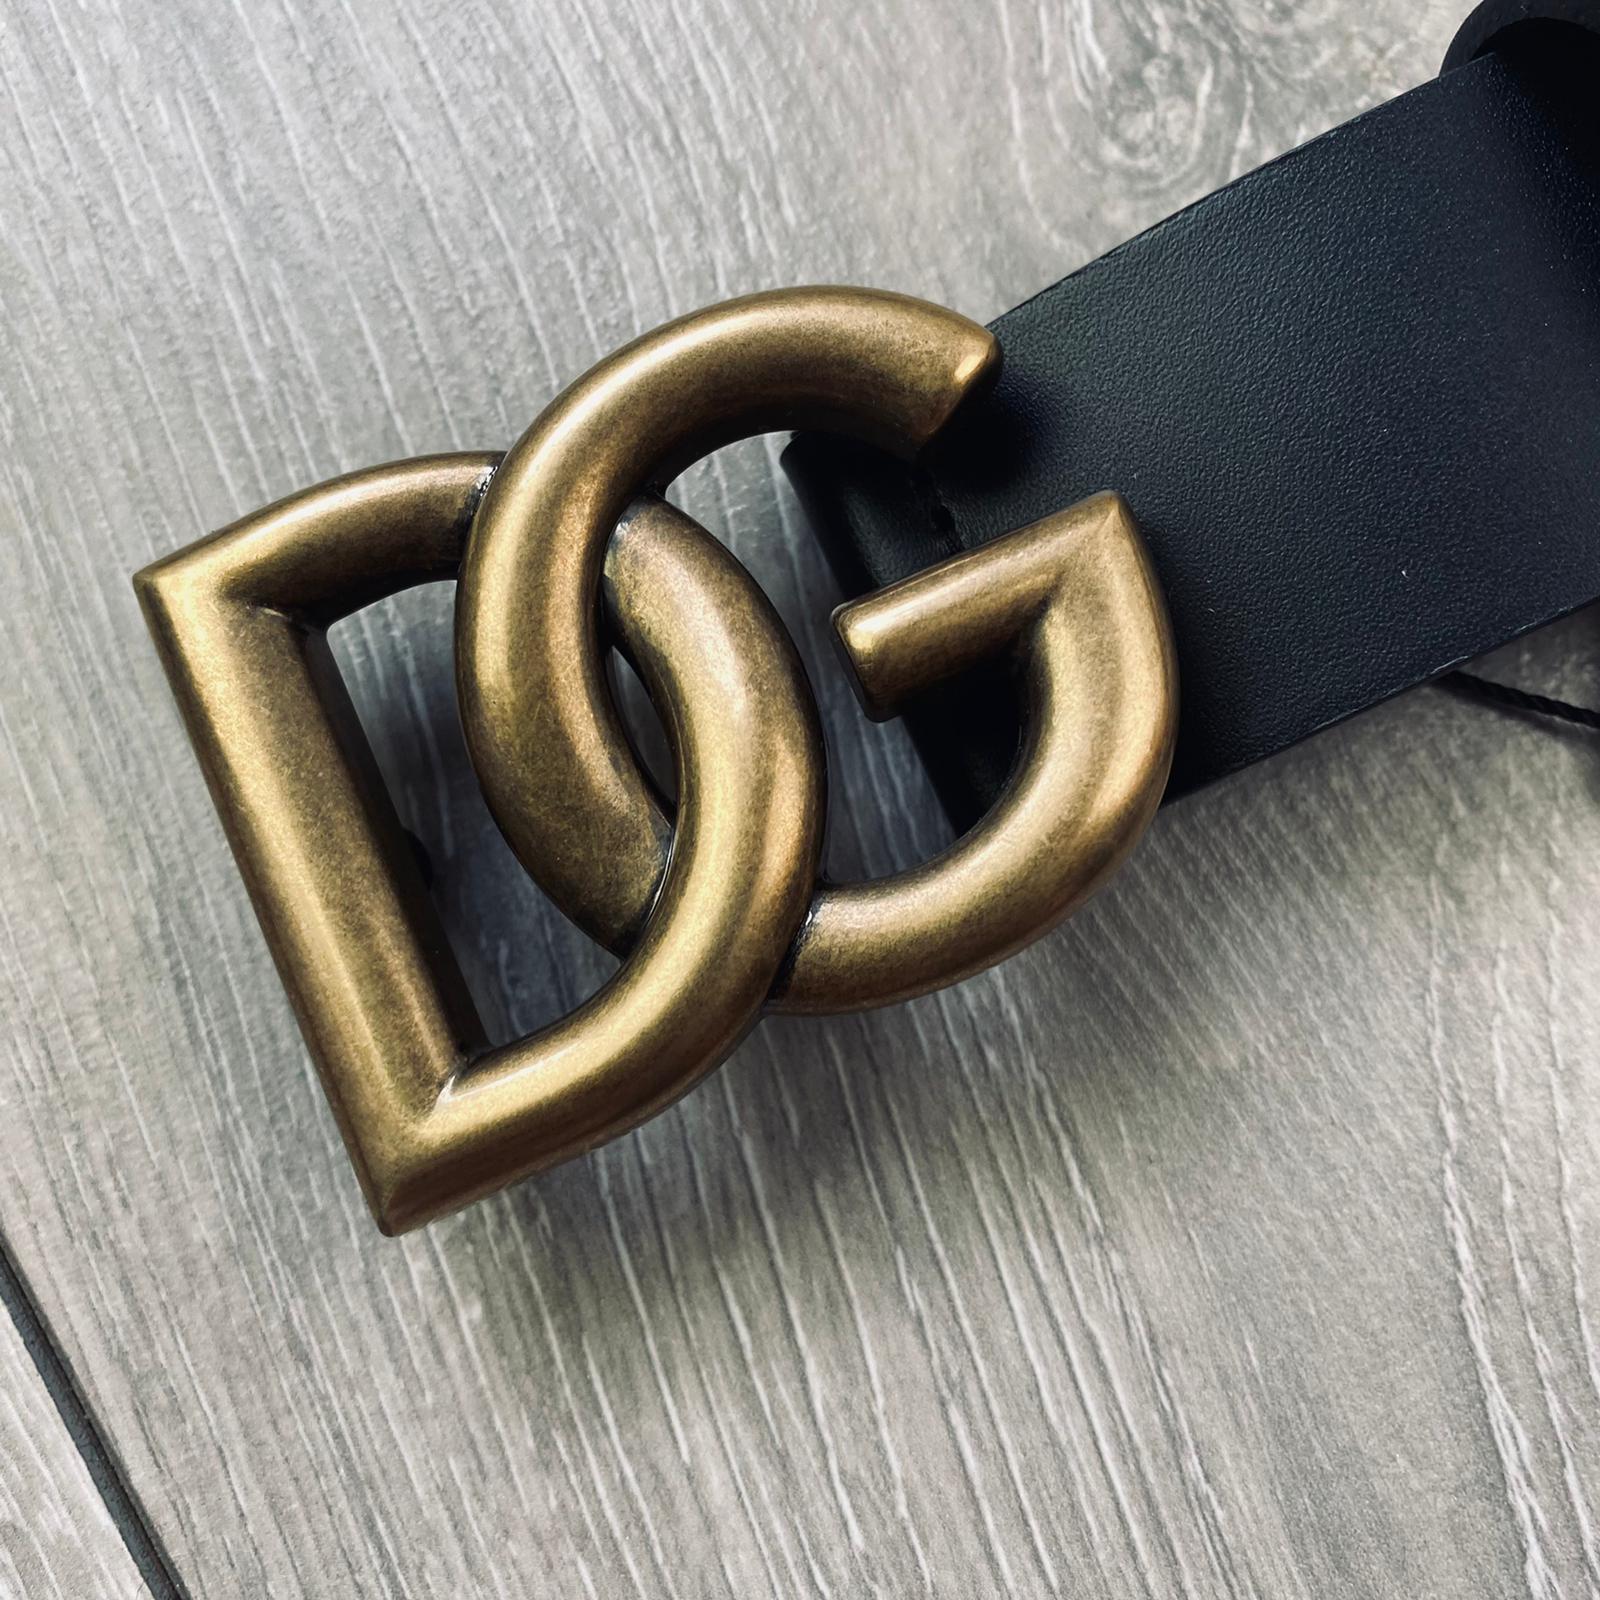 D&G Chrome Leather Belt